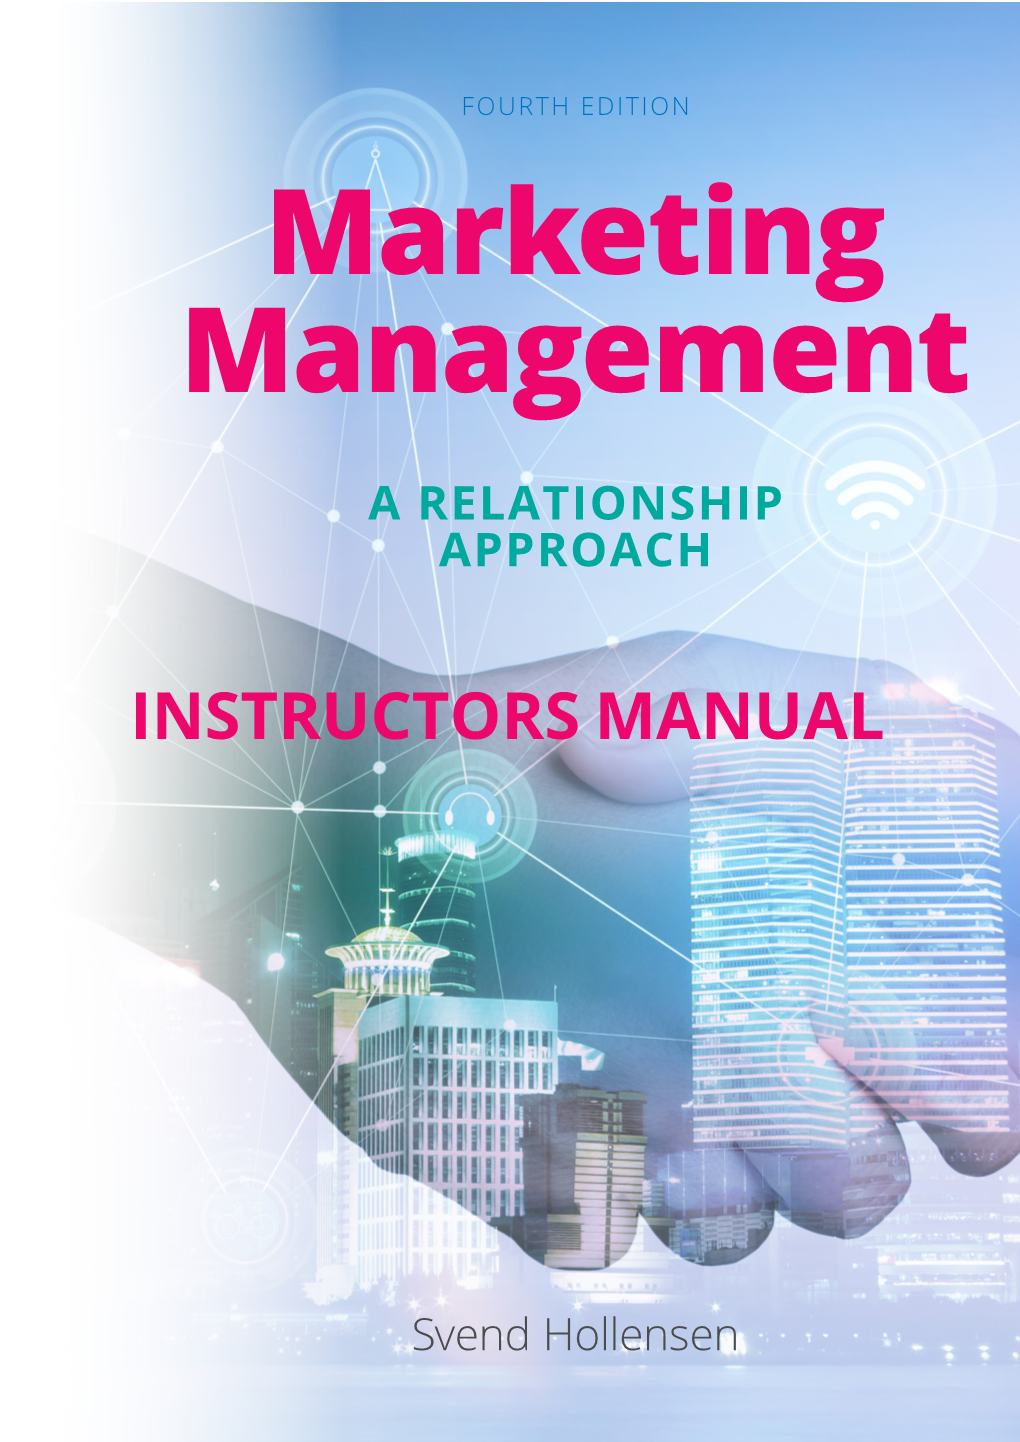 Download Instructor's Manual (PDF | 4.07